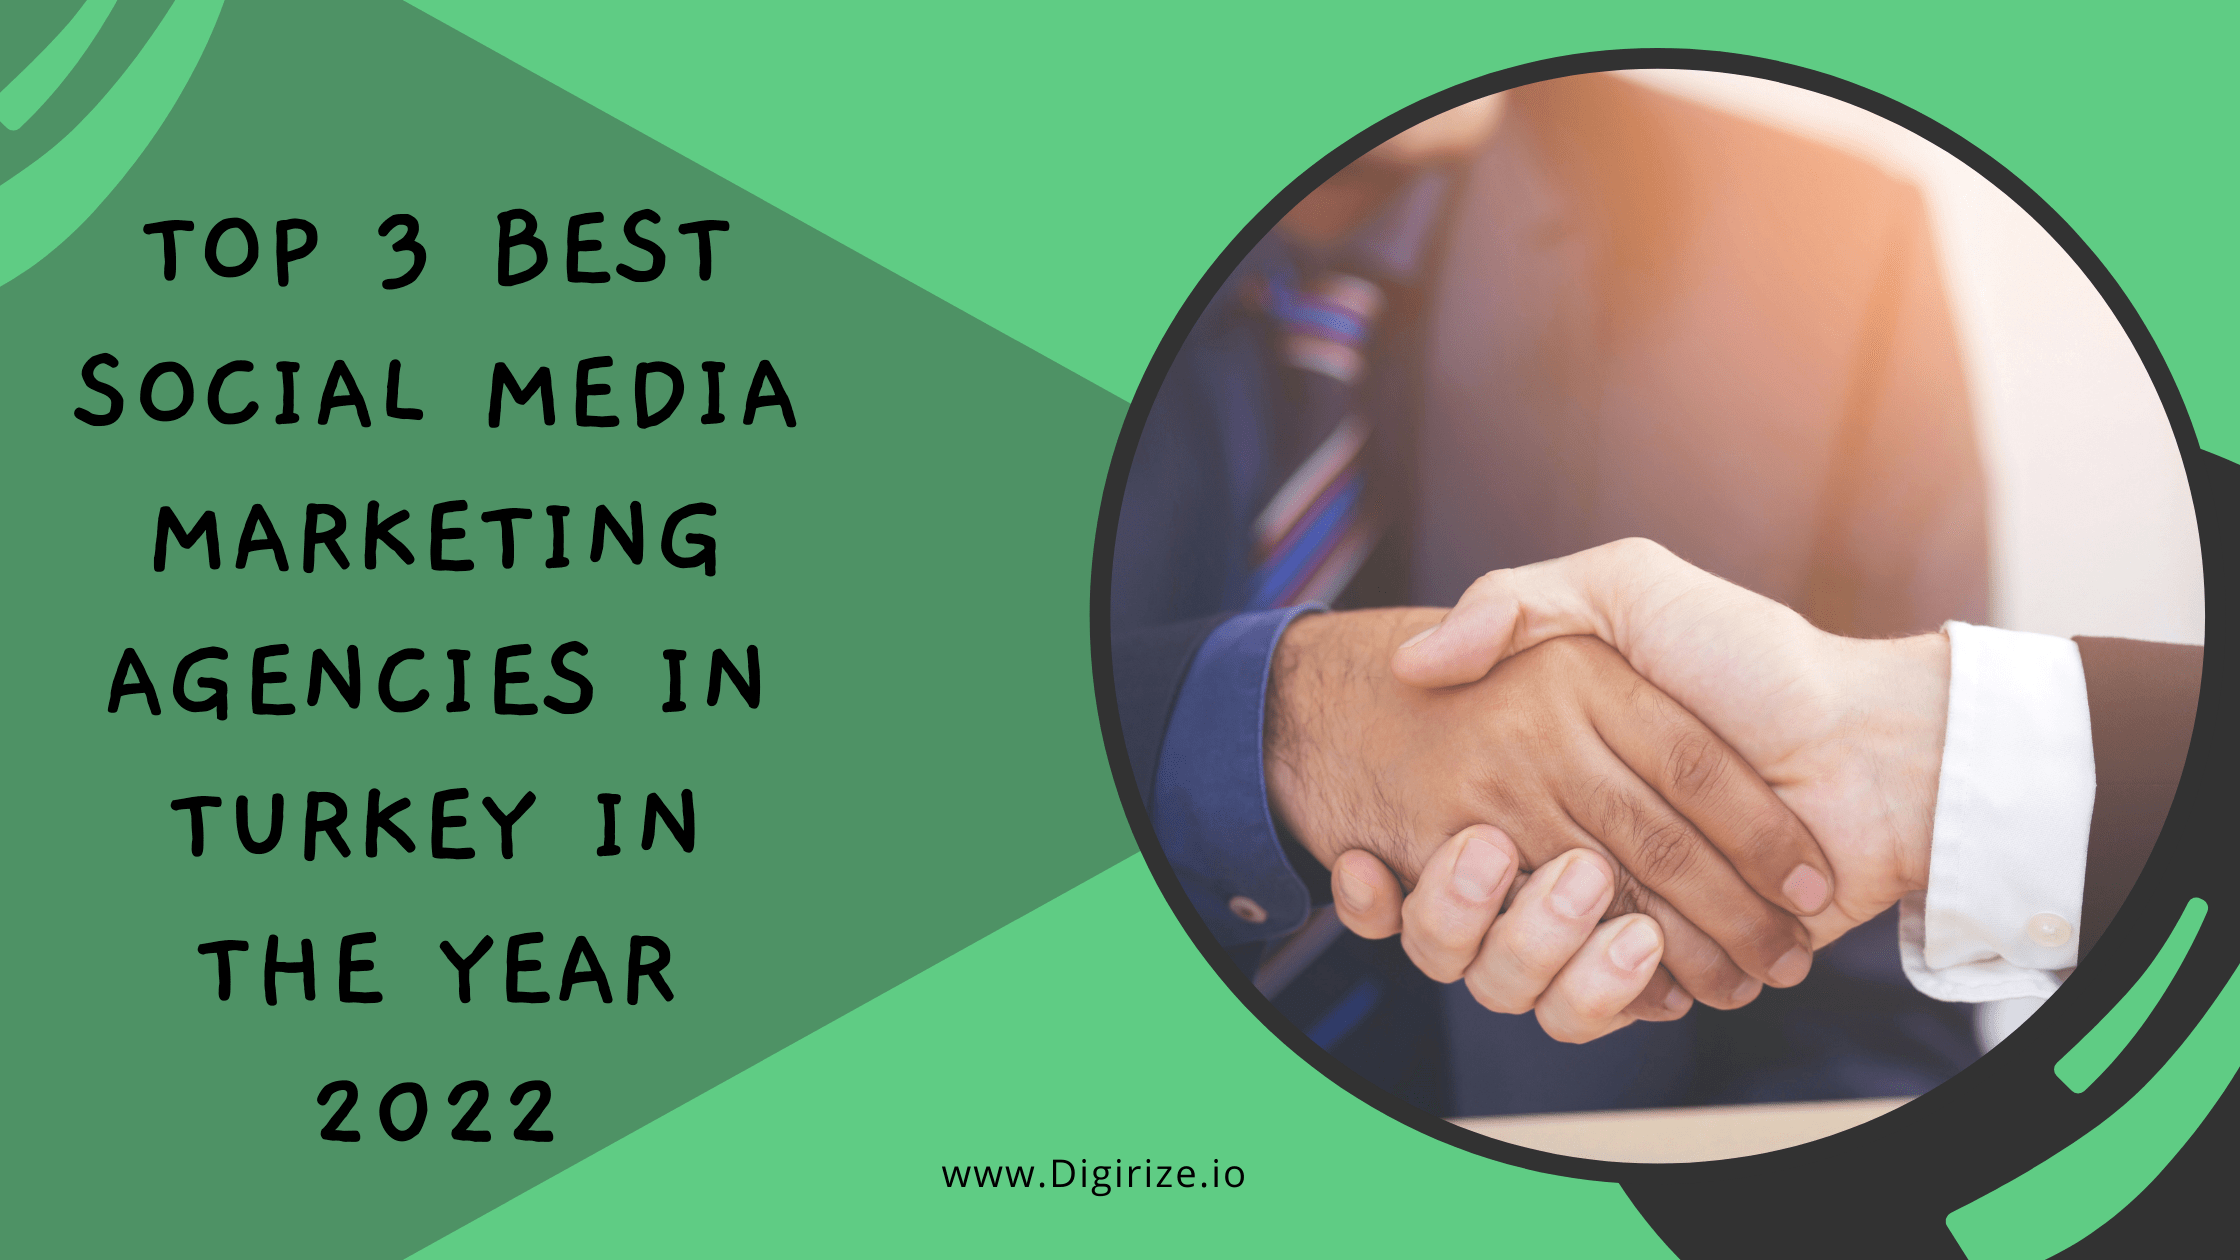 Top 3 Best Social Media Marketing Agencies in Turkey in the Year 2022